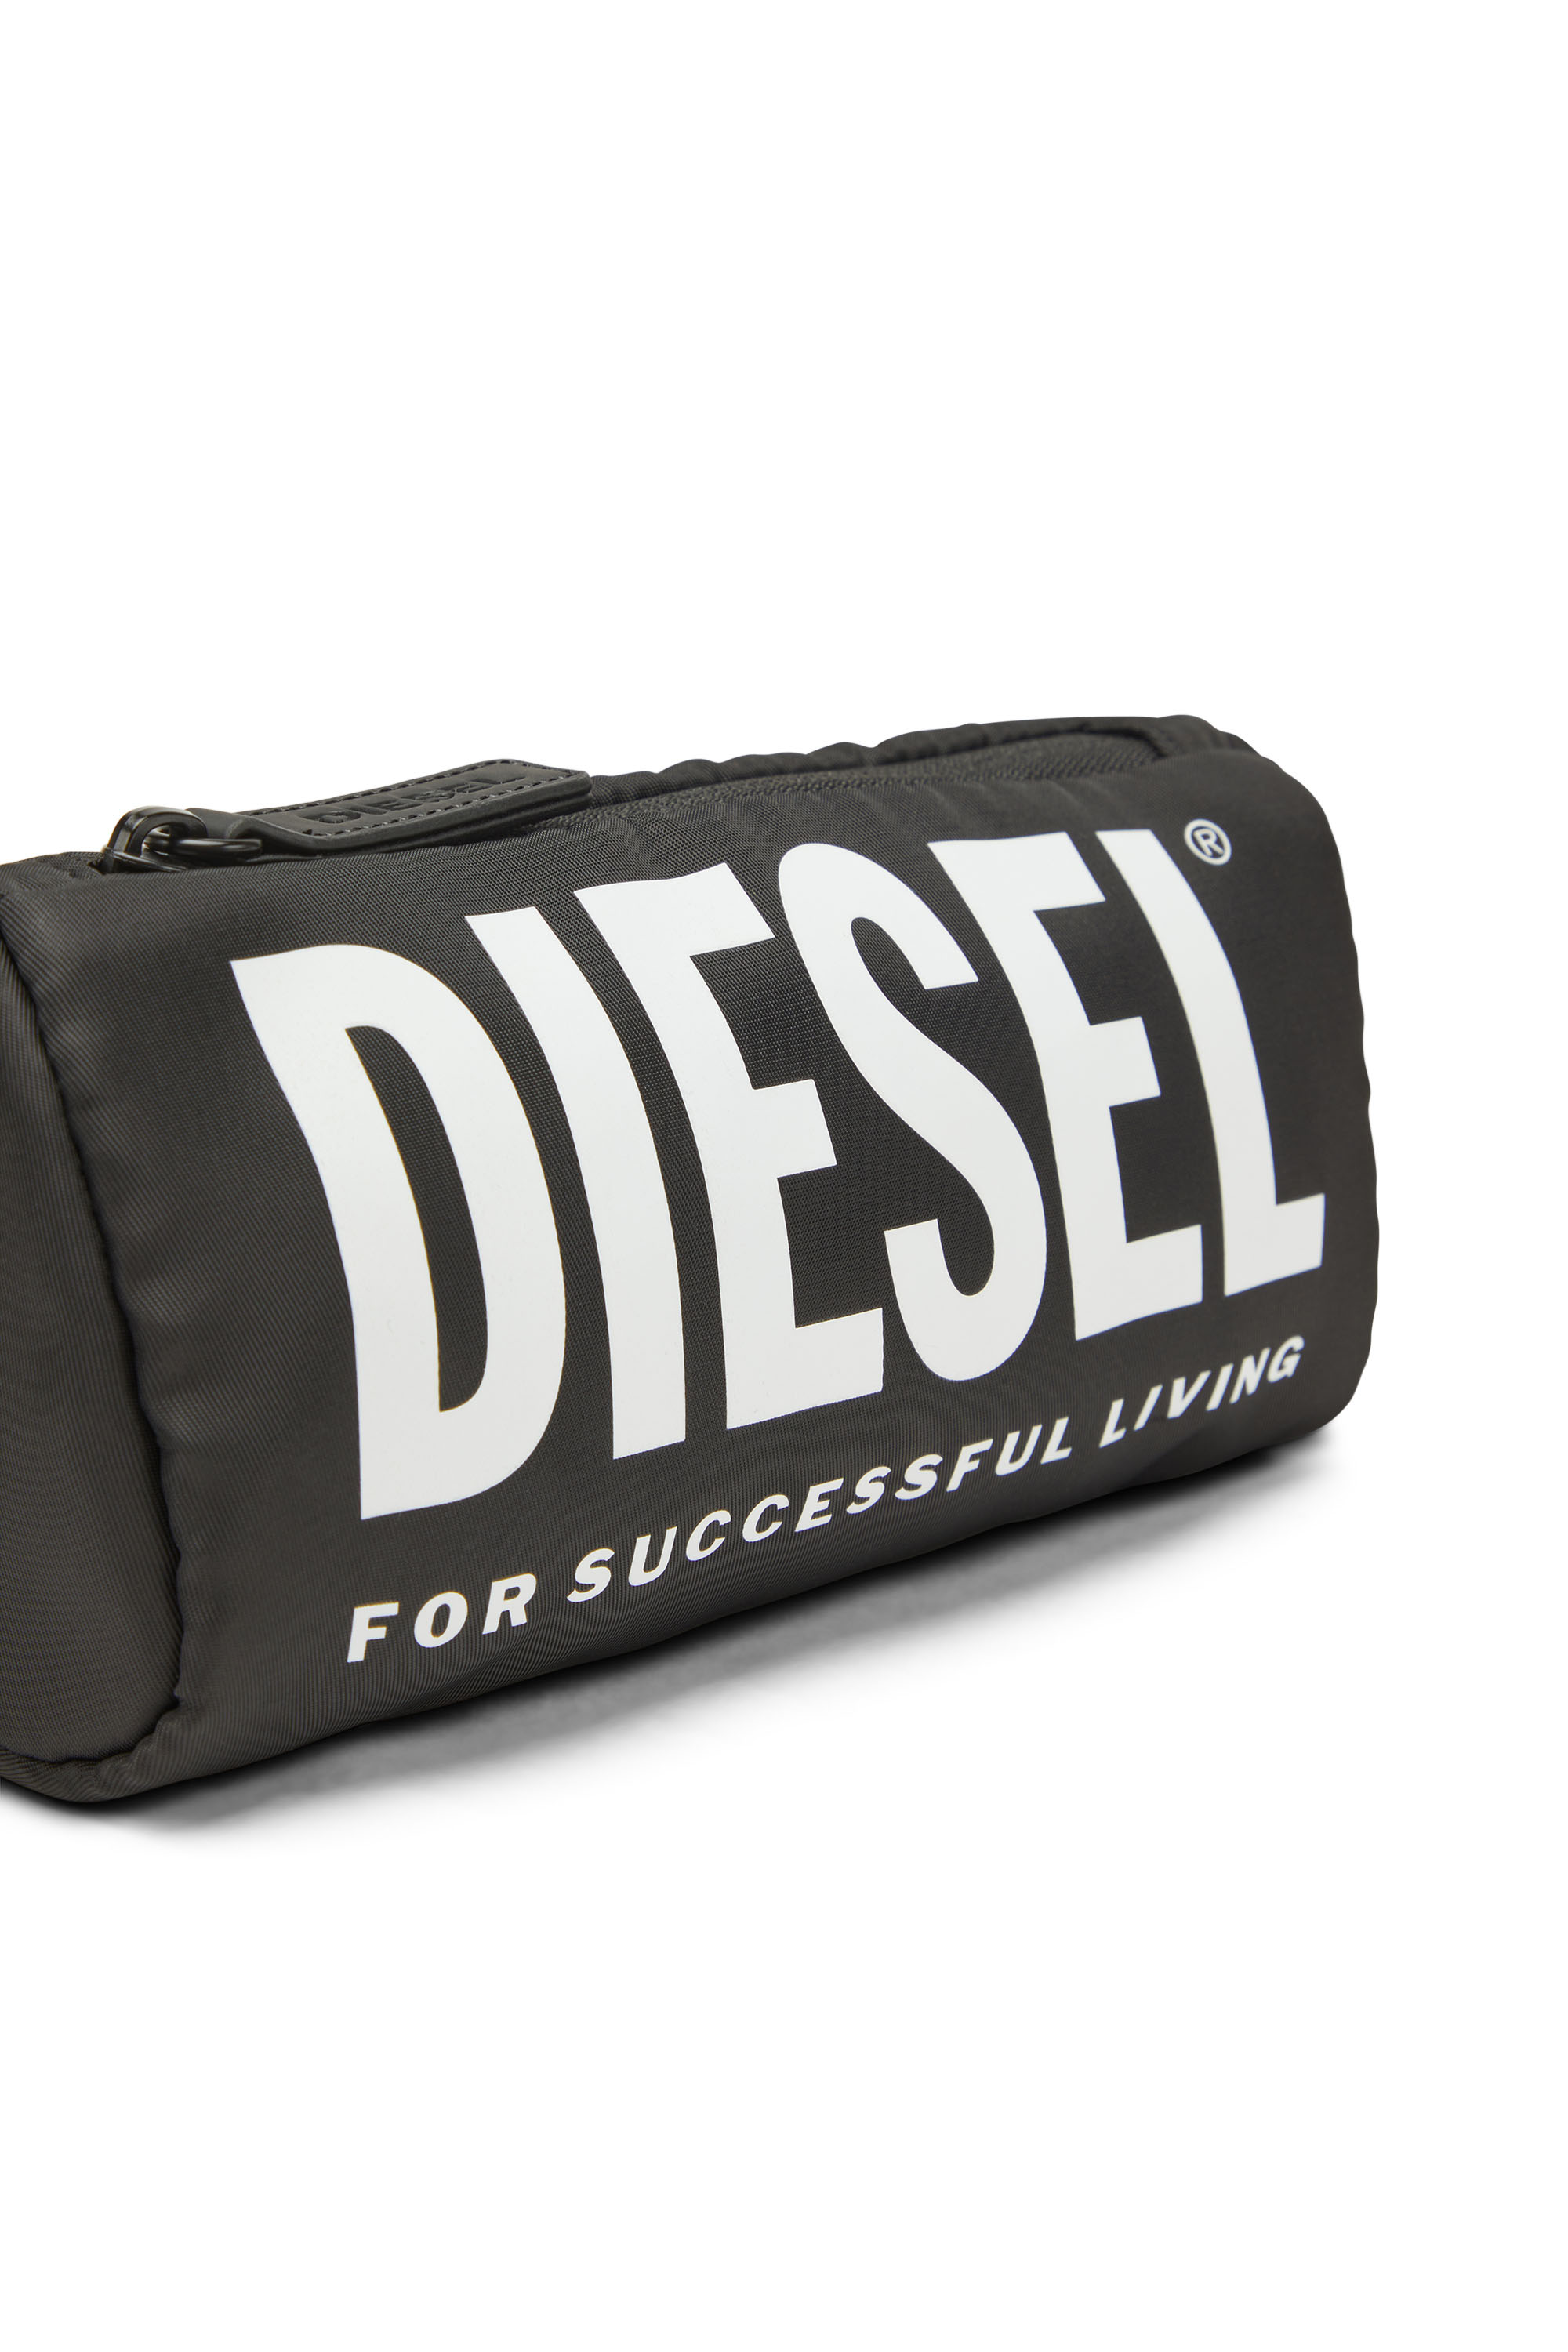 Diesel - WCASELOGO, Nero - Image 4